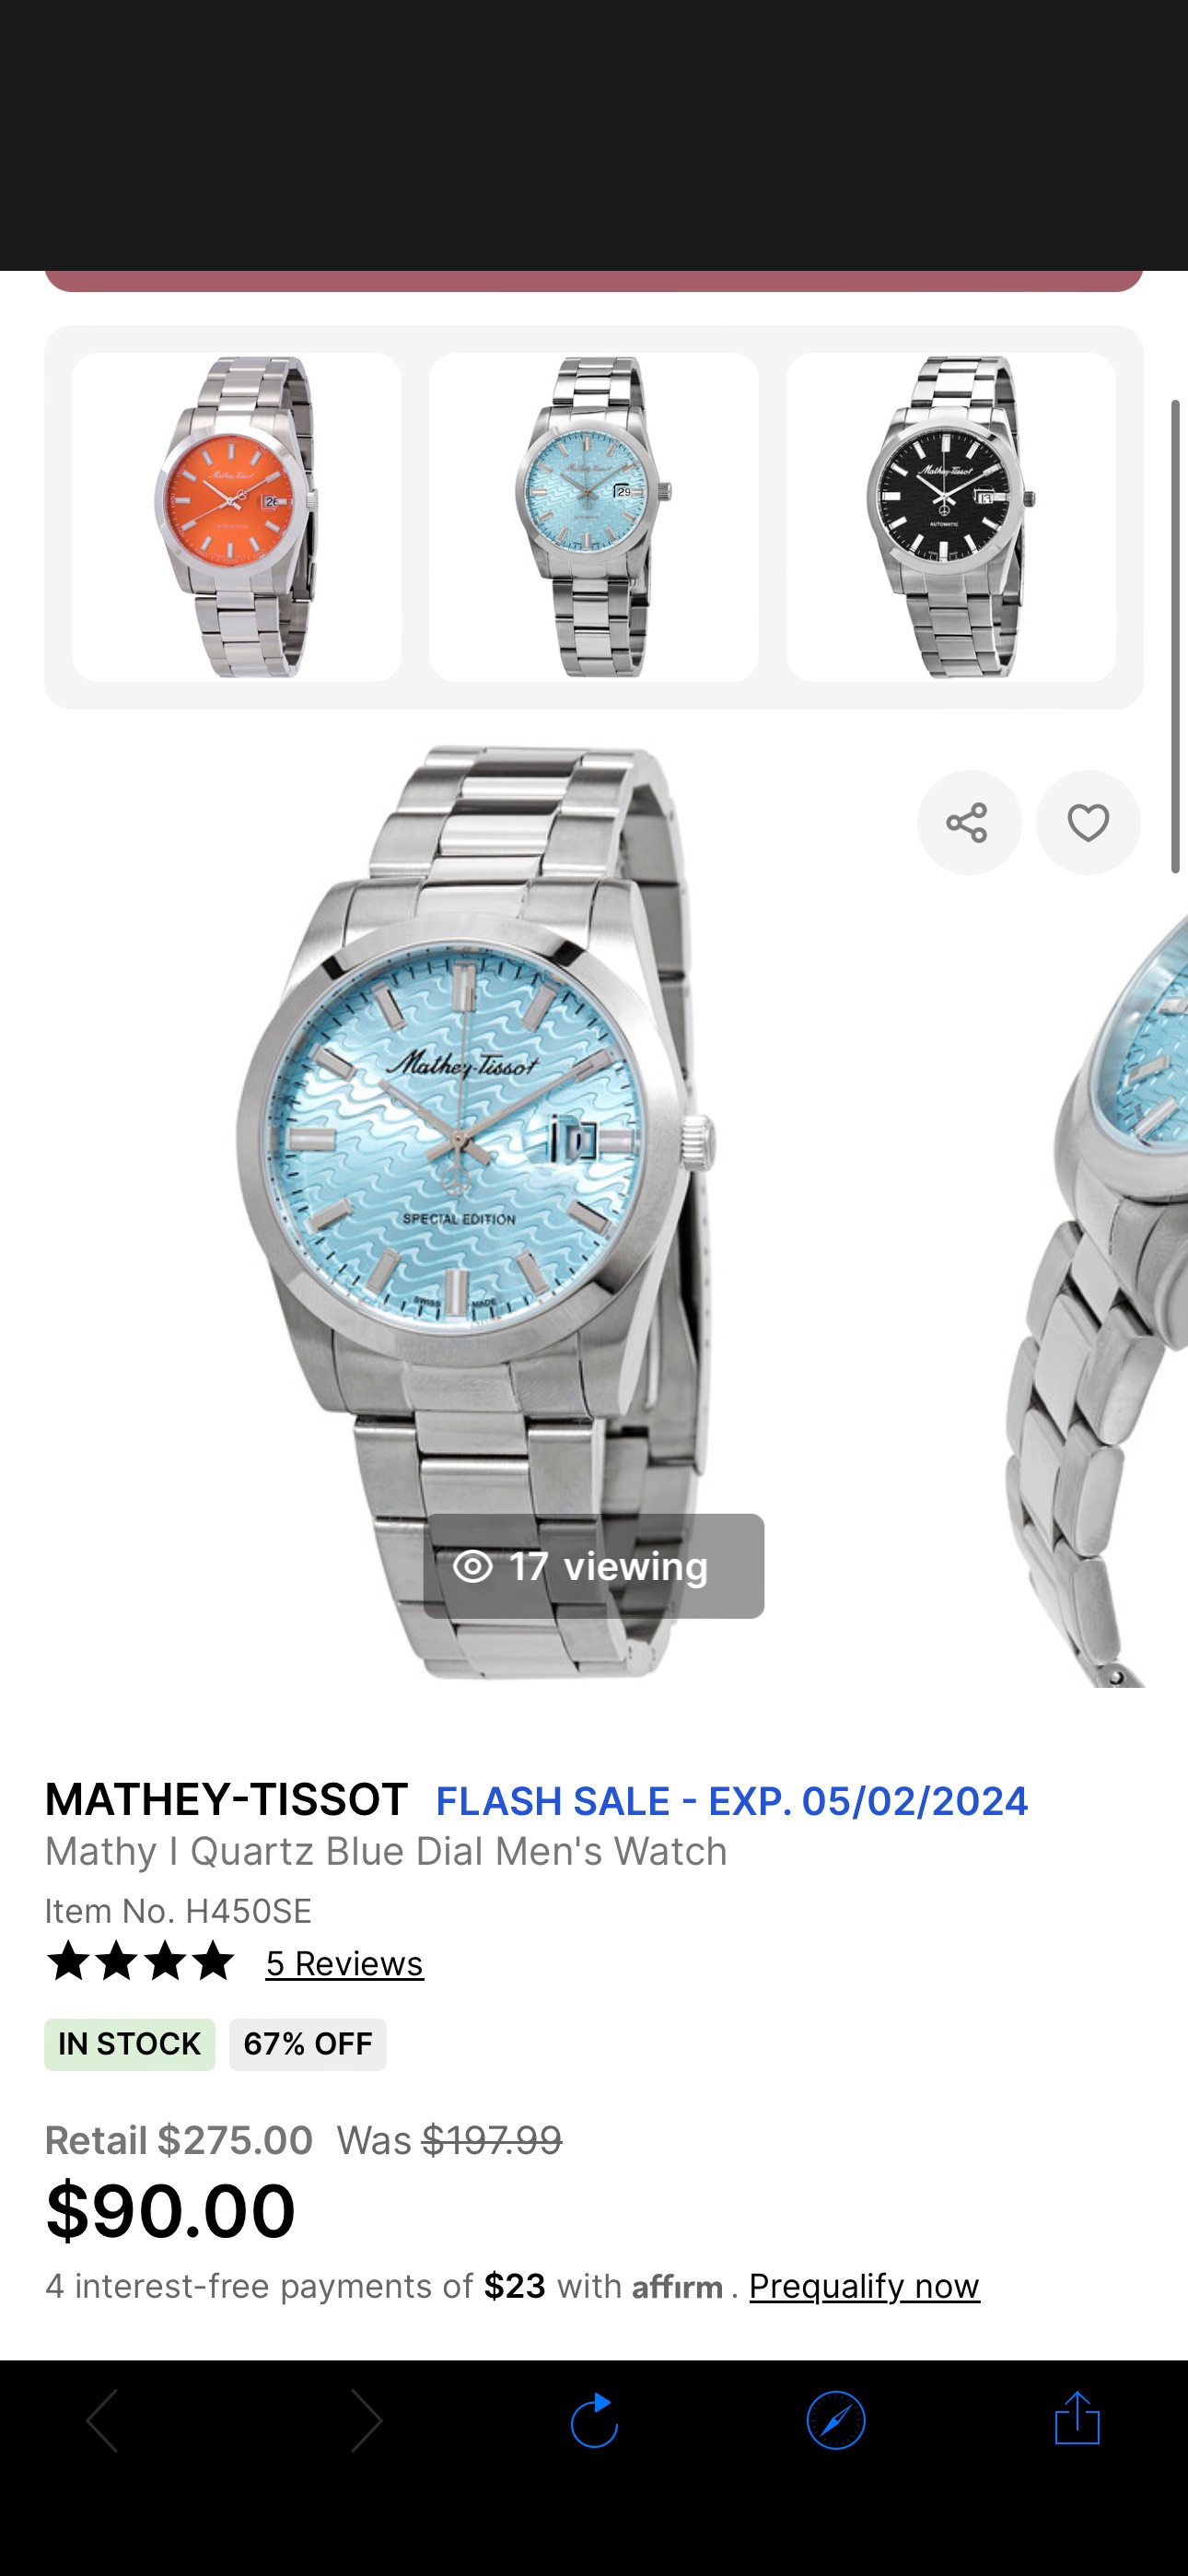 Mathey-Tissot Mathy I Quartz Blue Dial Men's Watch H450SE 7640331944852 - Watches, Mathy I - Jomashop